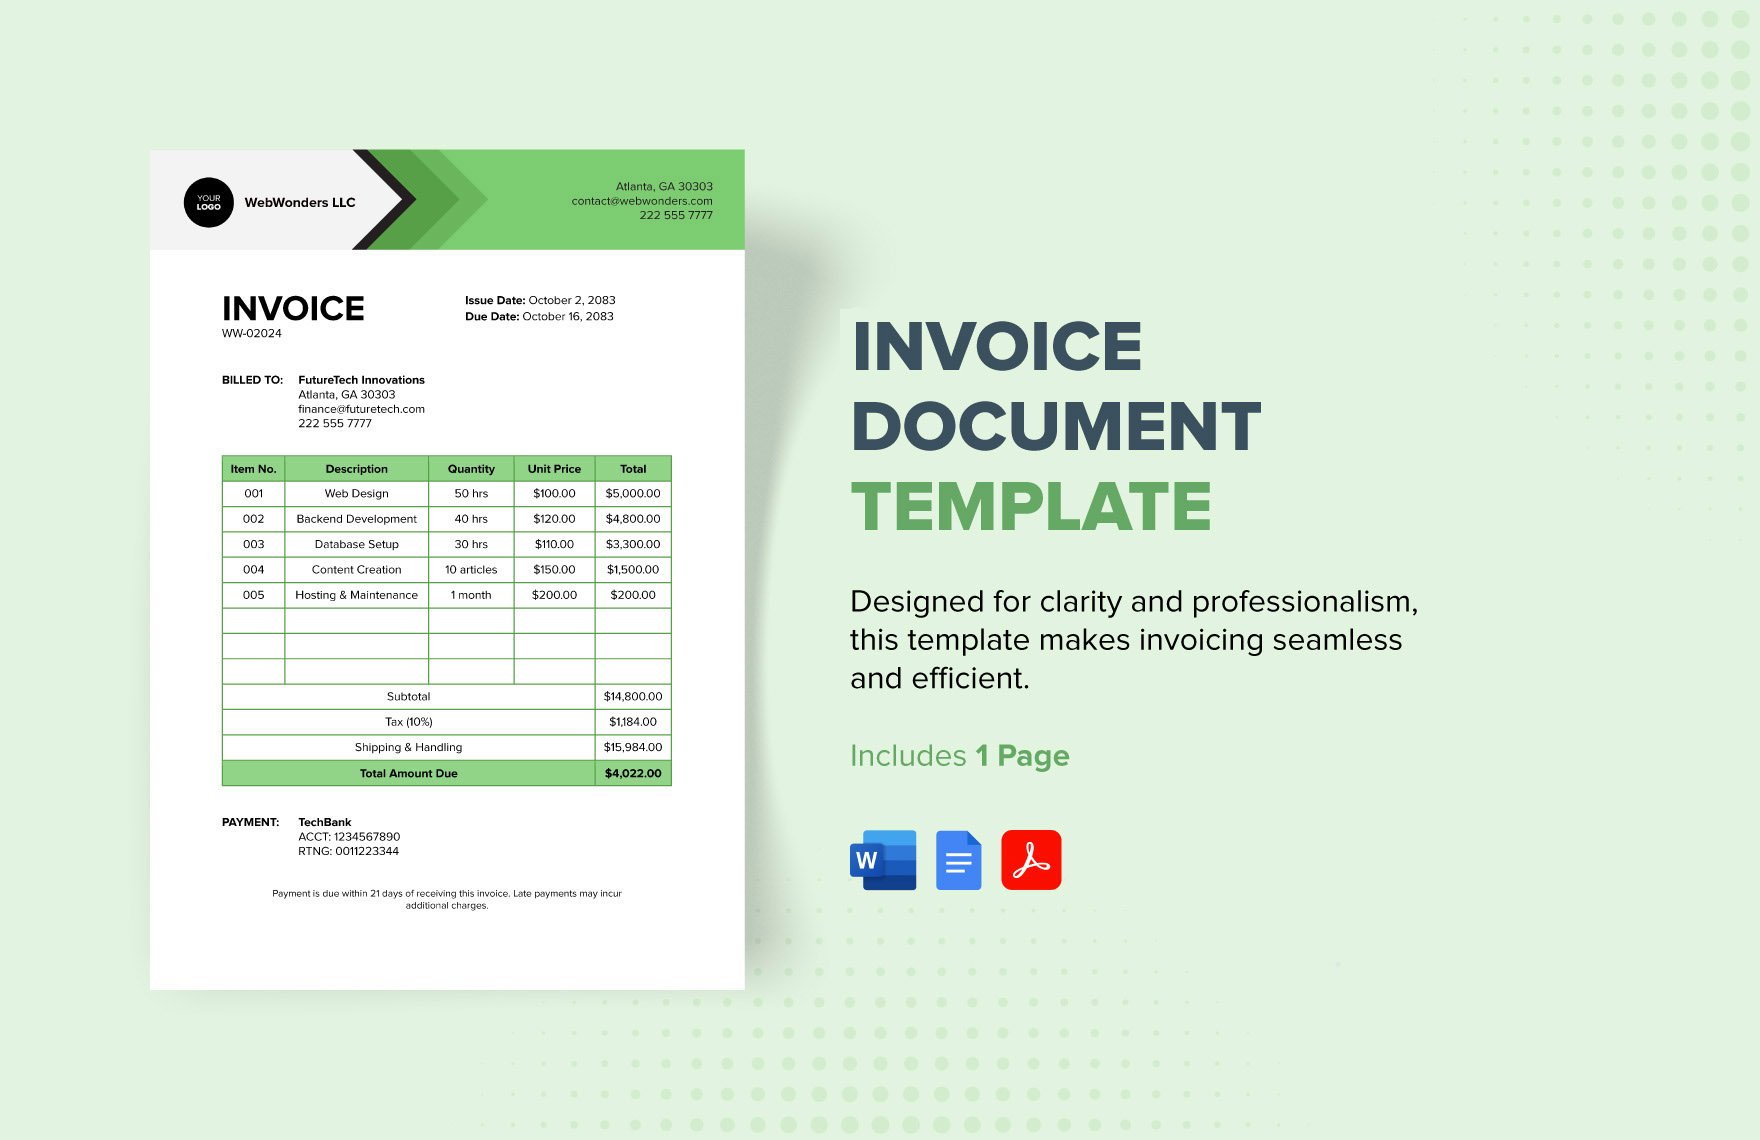 Invoice Document Template